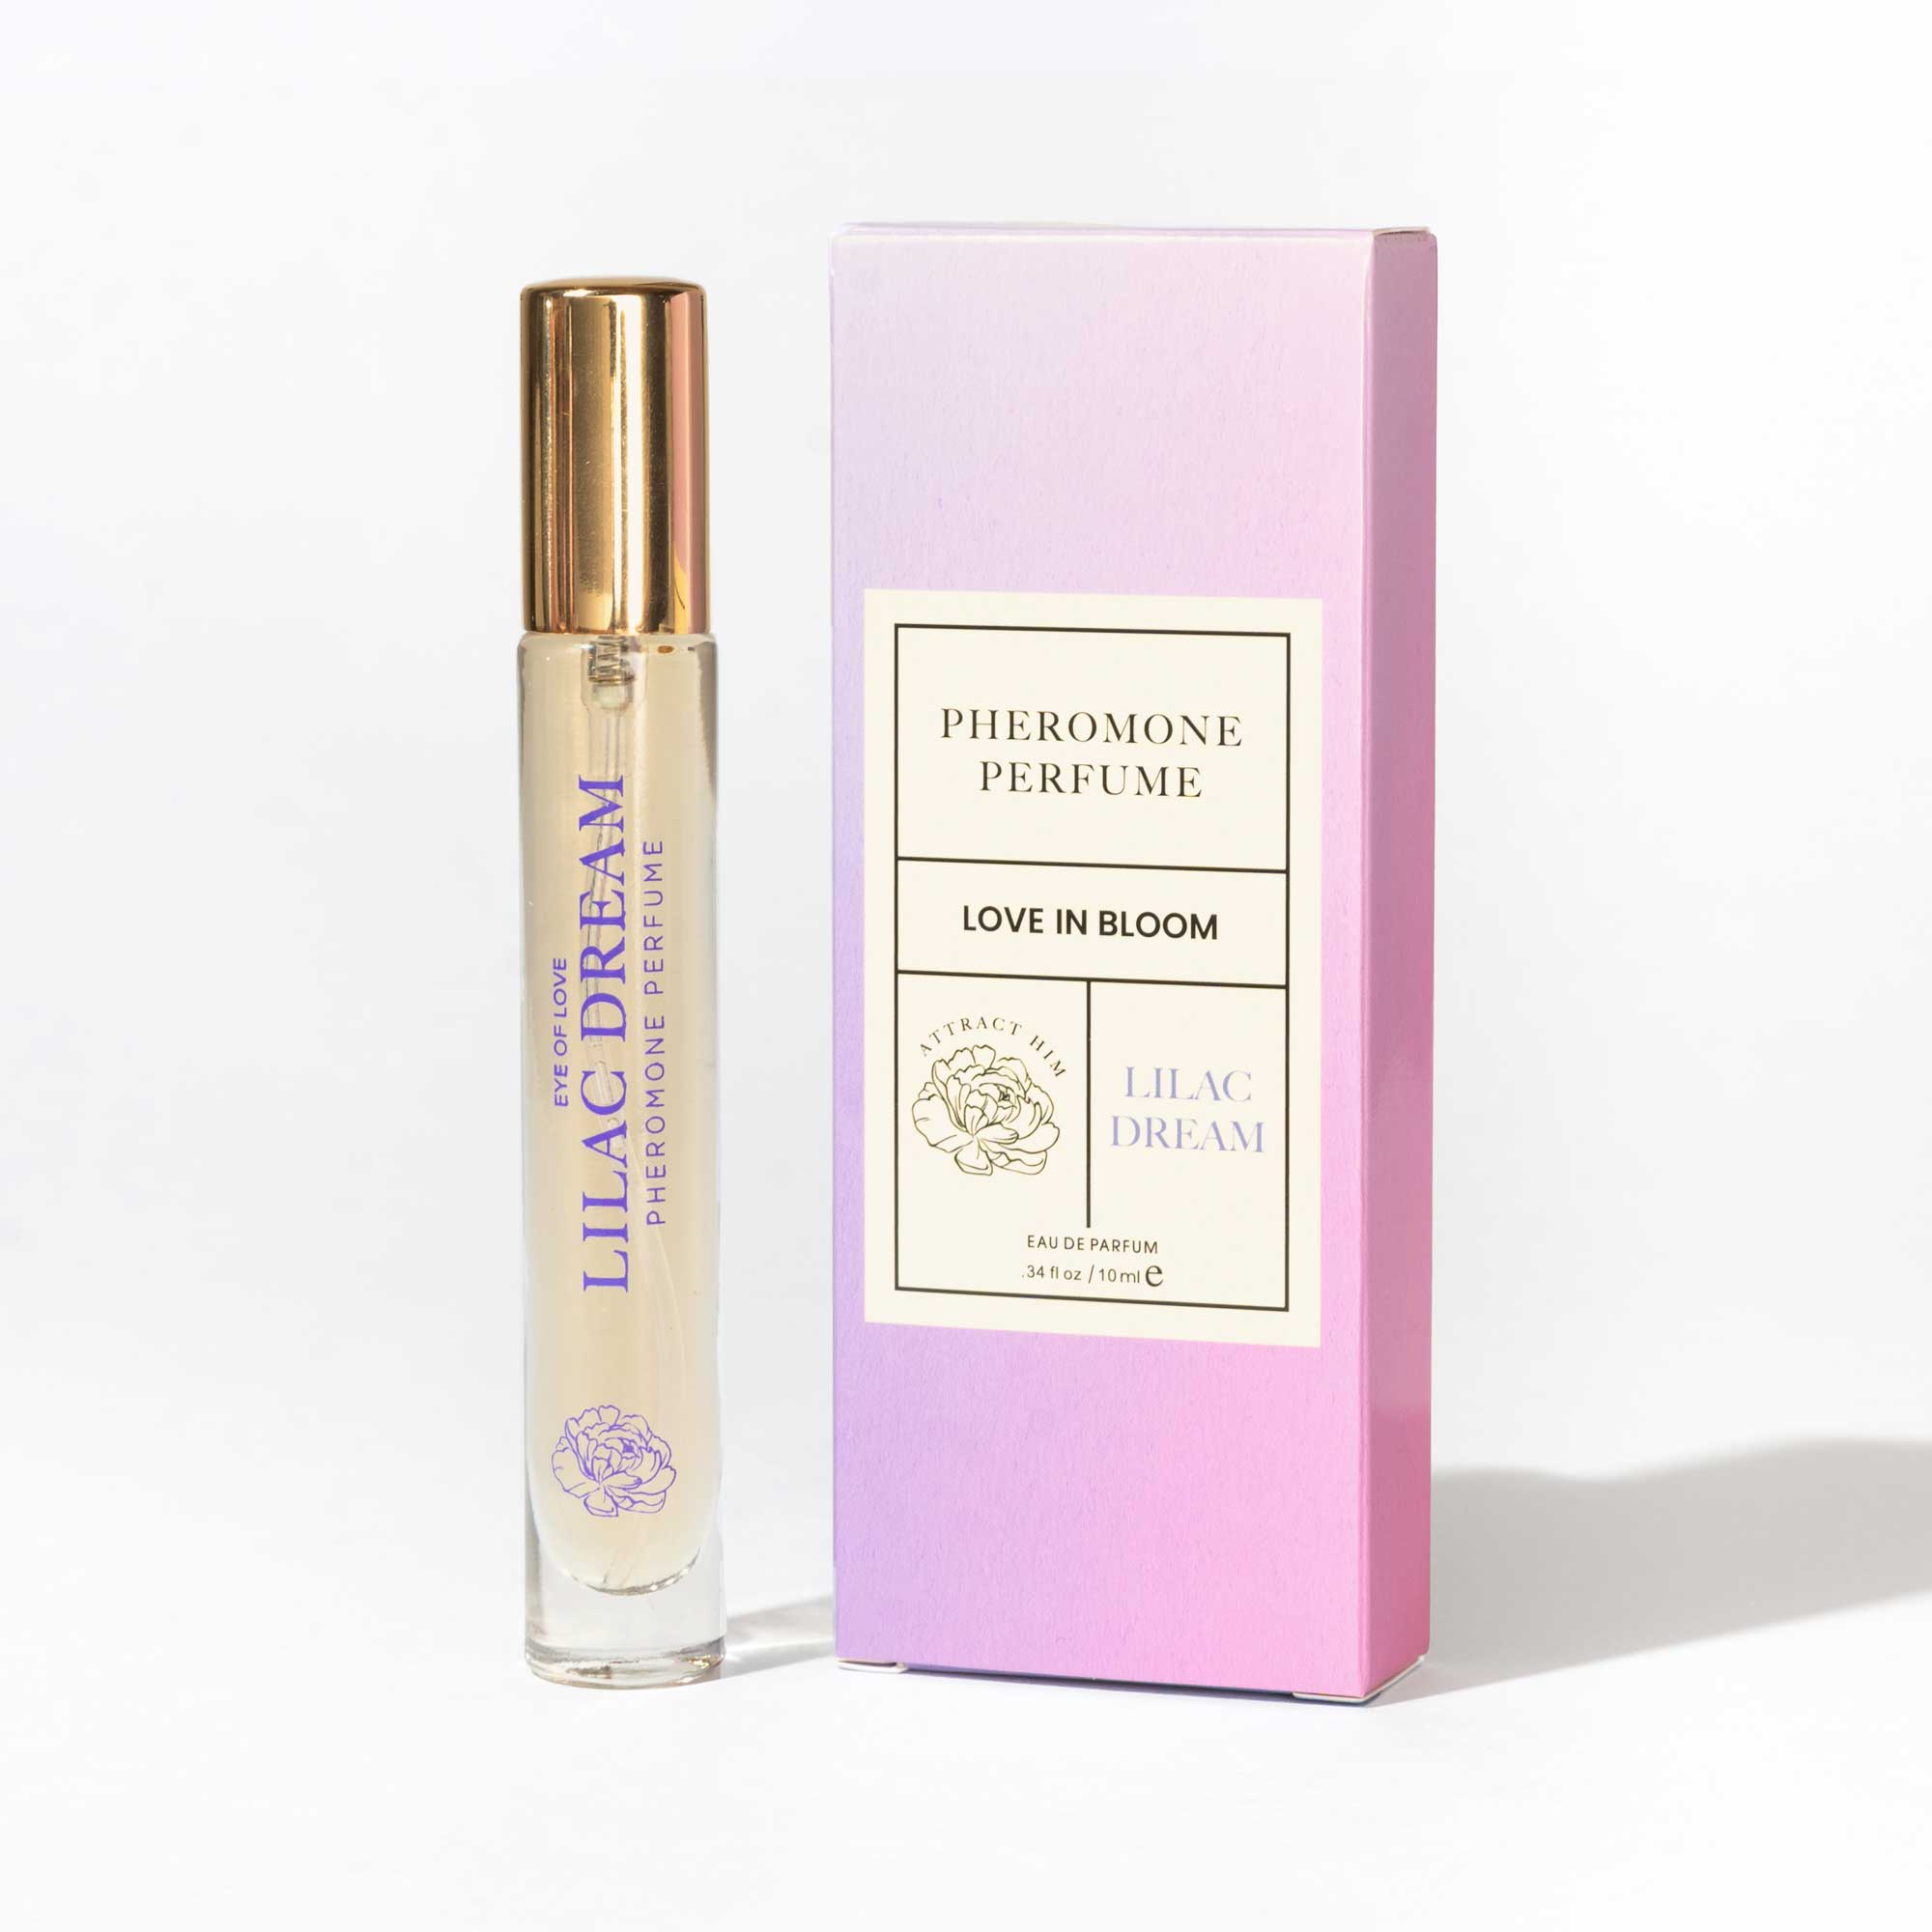 Bloom Lilac Dream Pheromone Perfume